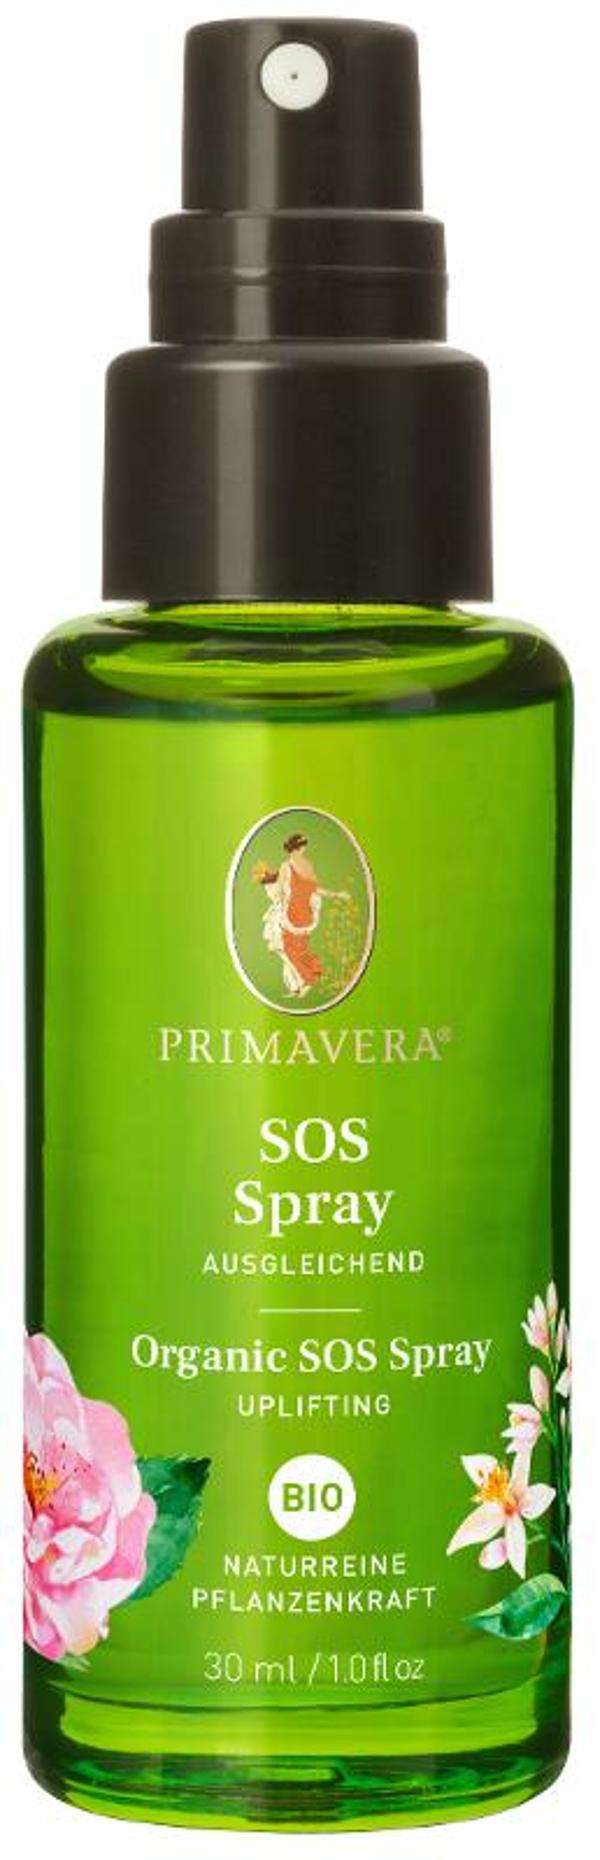 Produktfoto zu SOS Spray Primavera 30ml